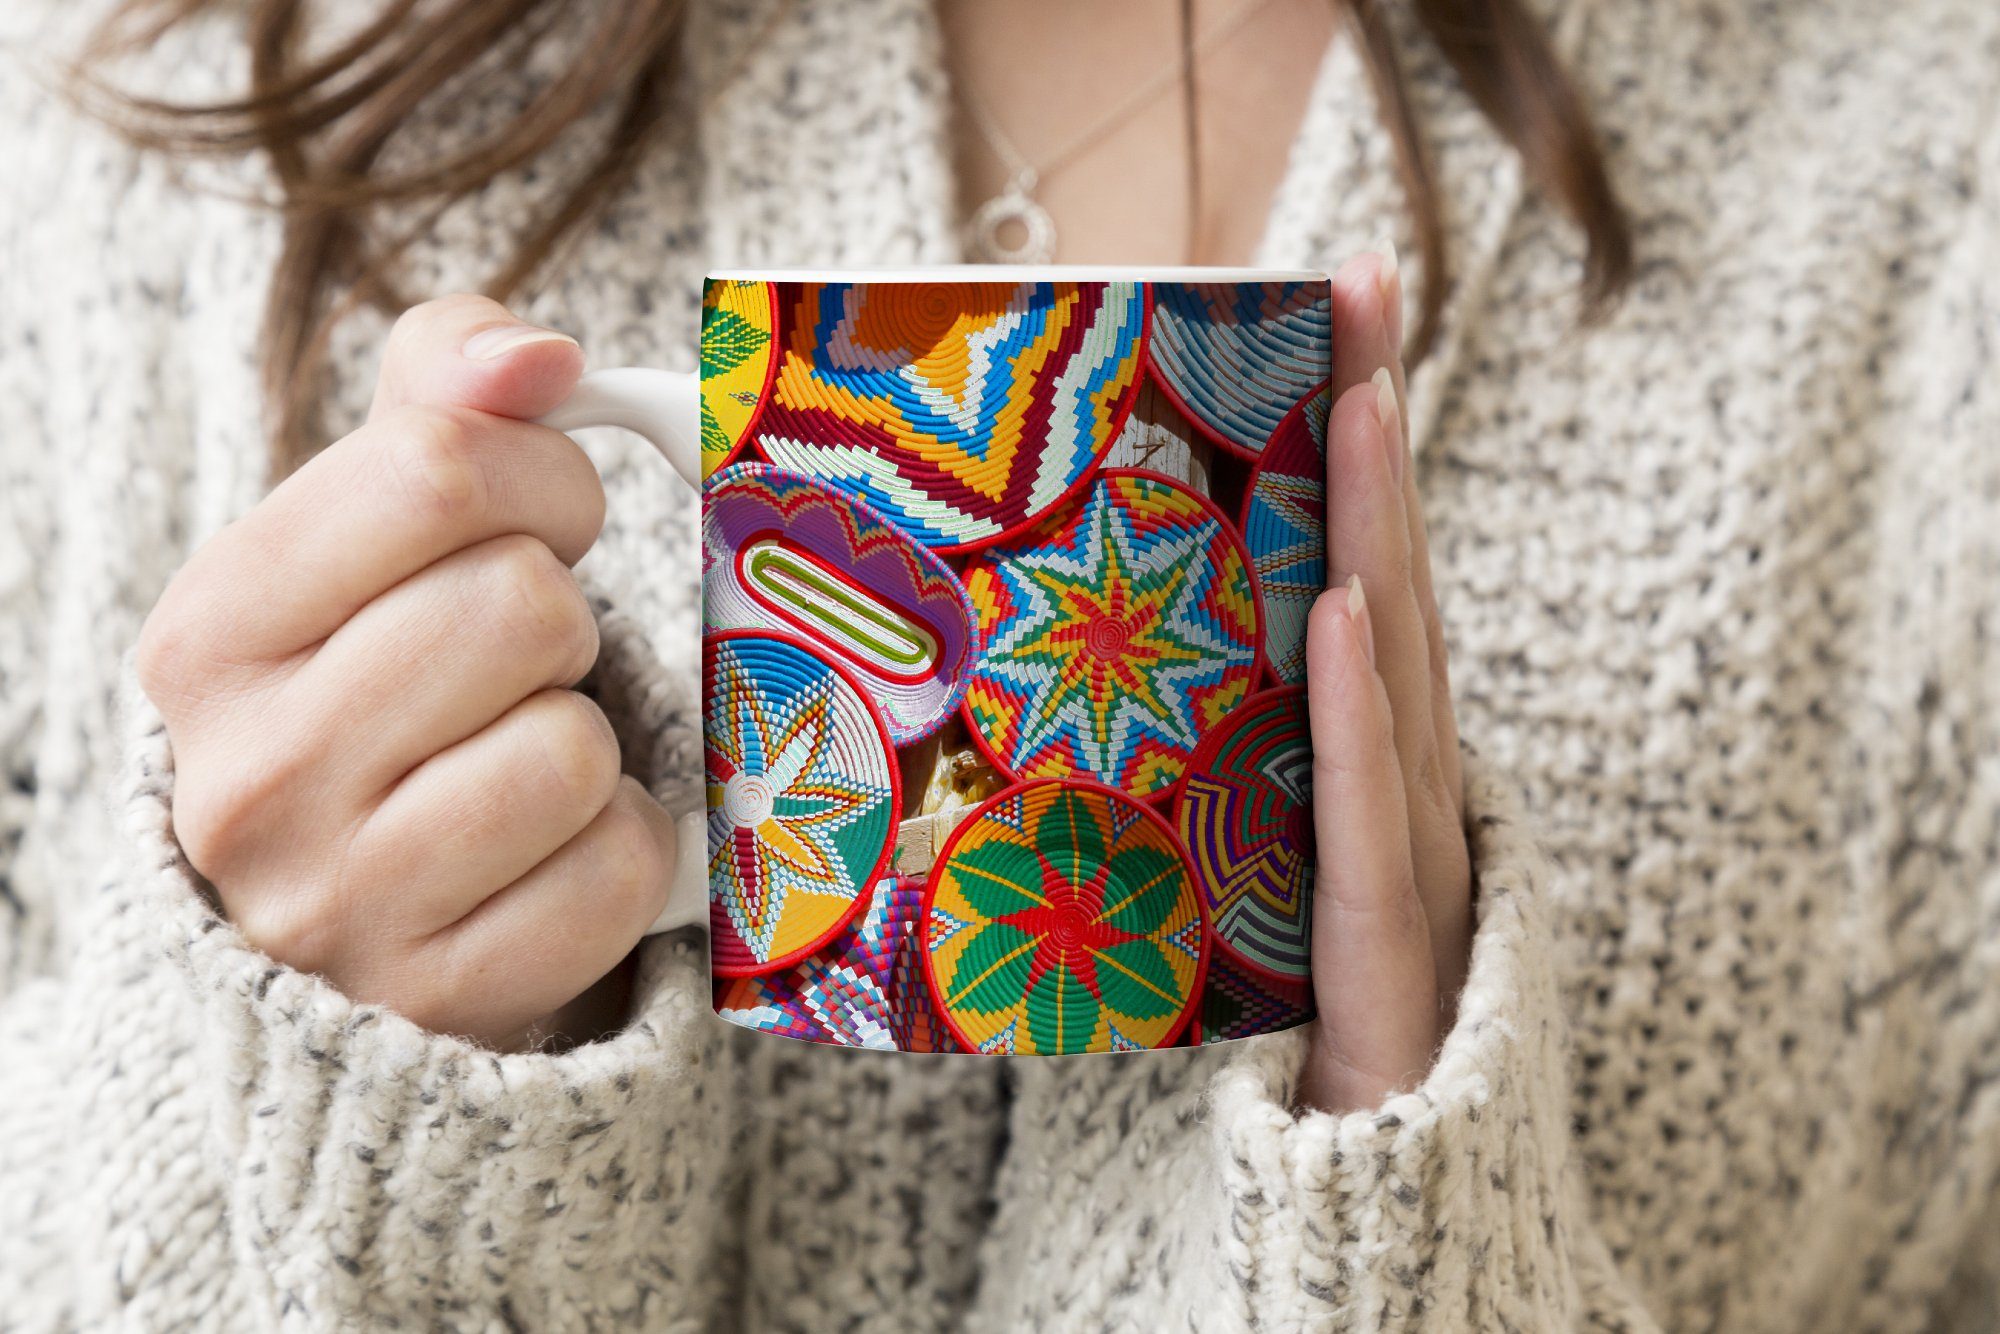 Kreis Teetasse, - Muster Farben, Keramik, Geschenk MuchoWow Tasse Teetasse, - Becher, Kaffeetassen,